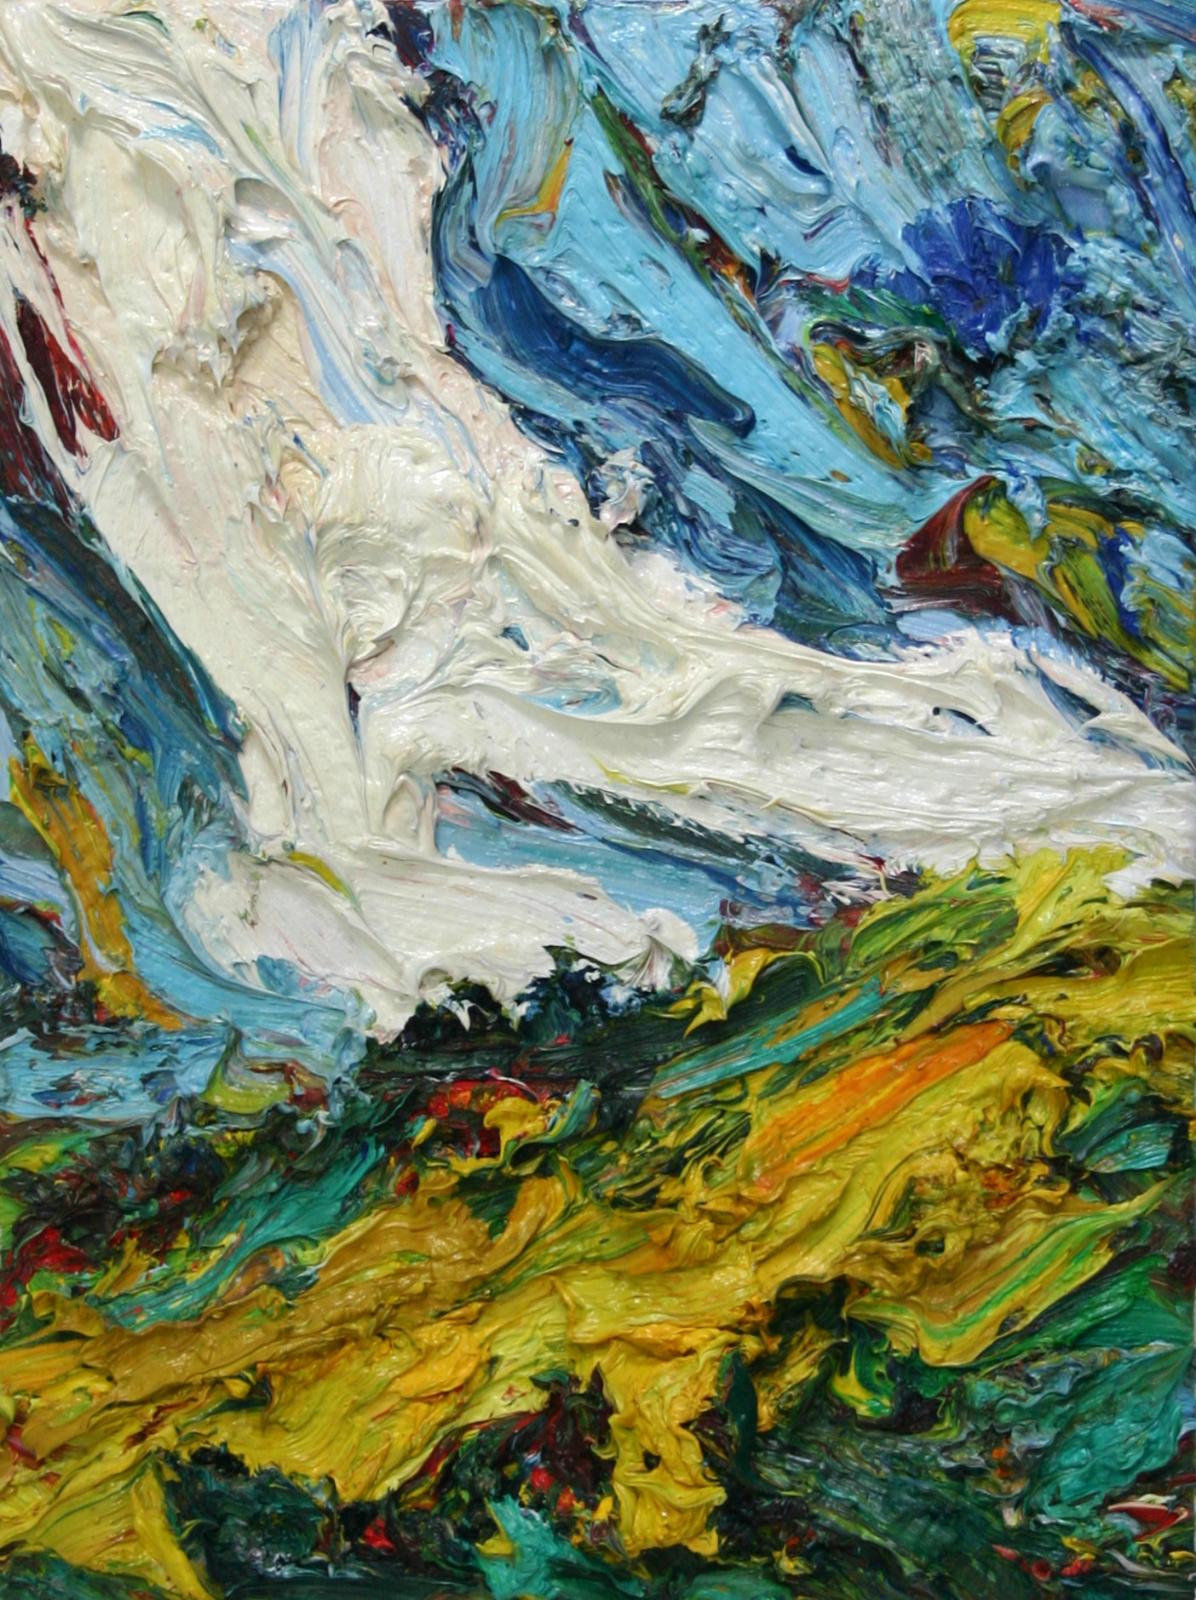 Harry Meyer, FELD, 2012, Öl auf Leinwand, 33 cm x 44 cm, Preis auf Anfrage, mey008kü